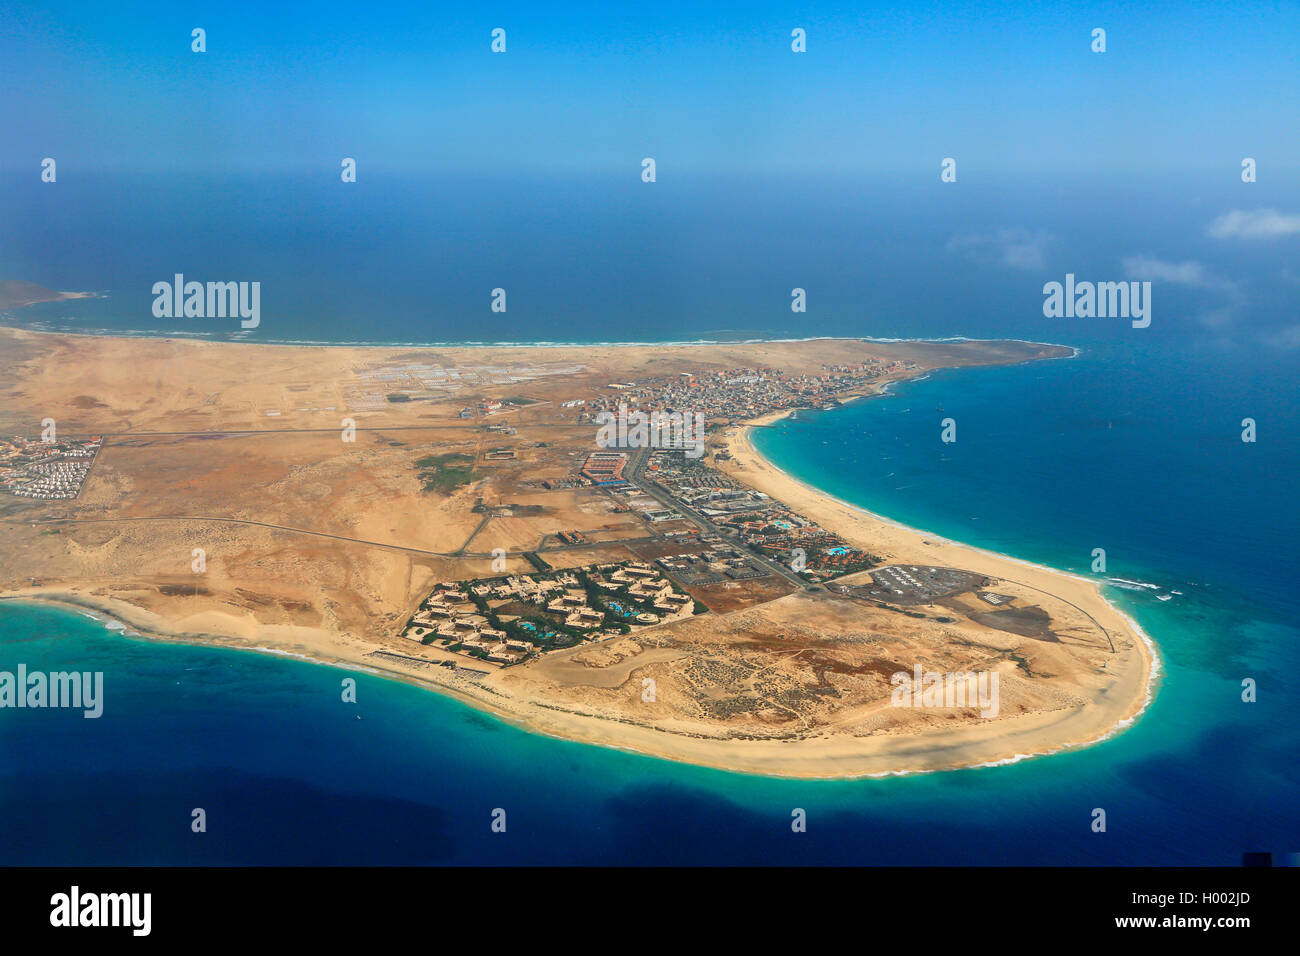 Sal island cap verde immagini e fotografie stock ad alta risoluzione - Alamy